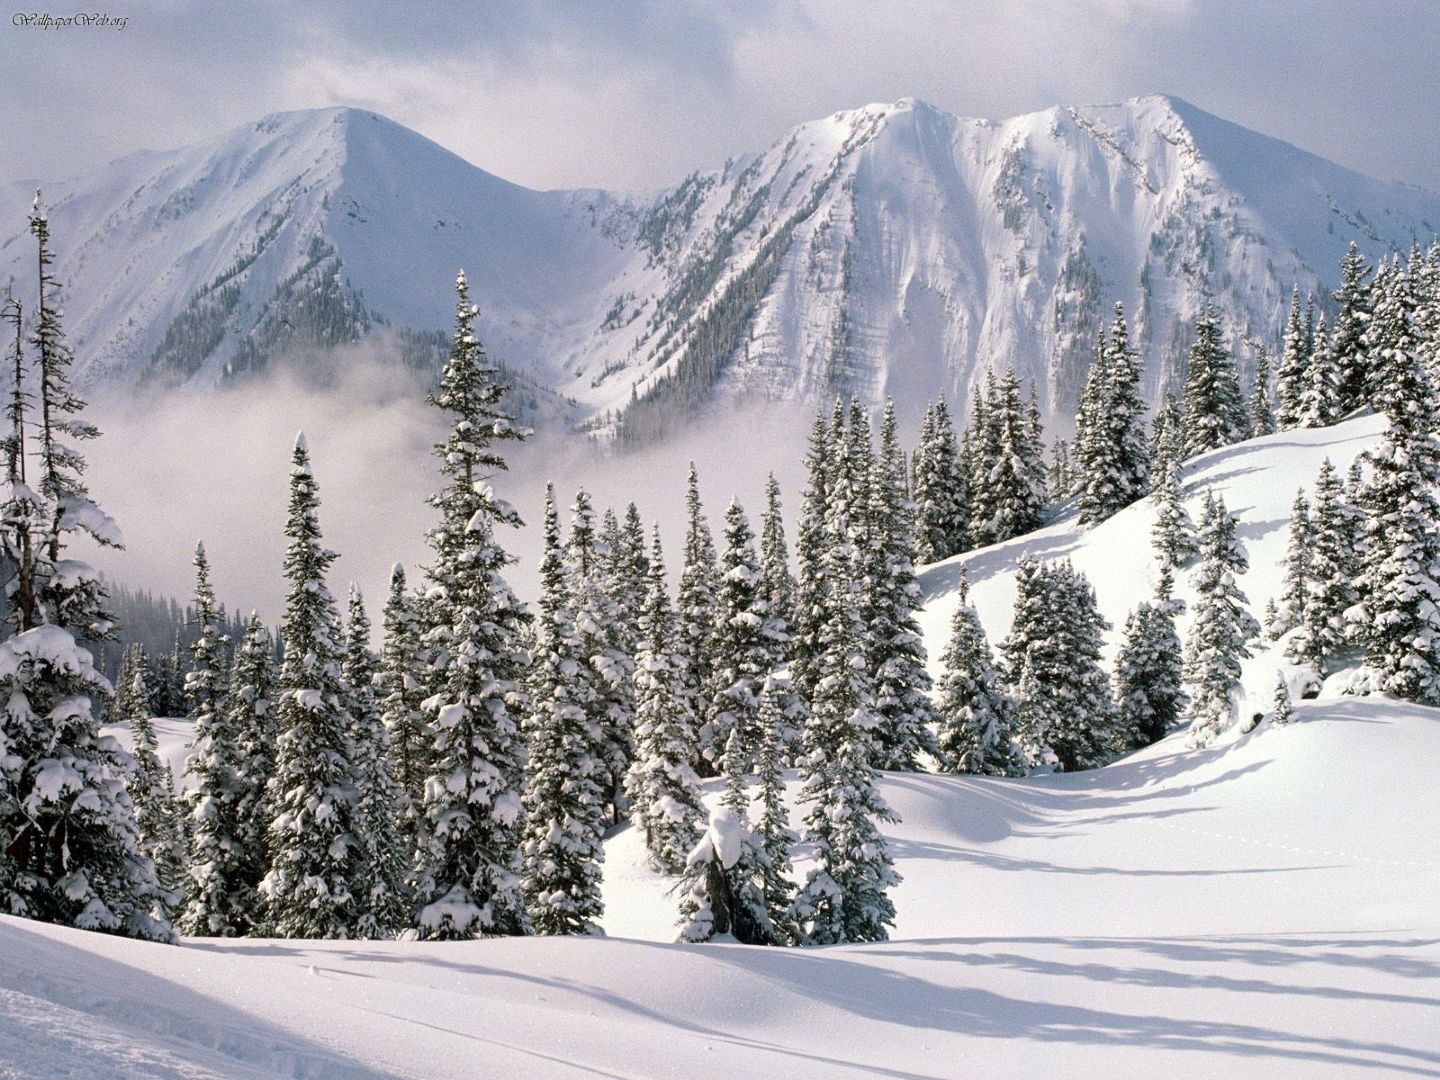 Nature: Winter Wonderland, British Columbia, Canada, picture nr. 25520